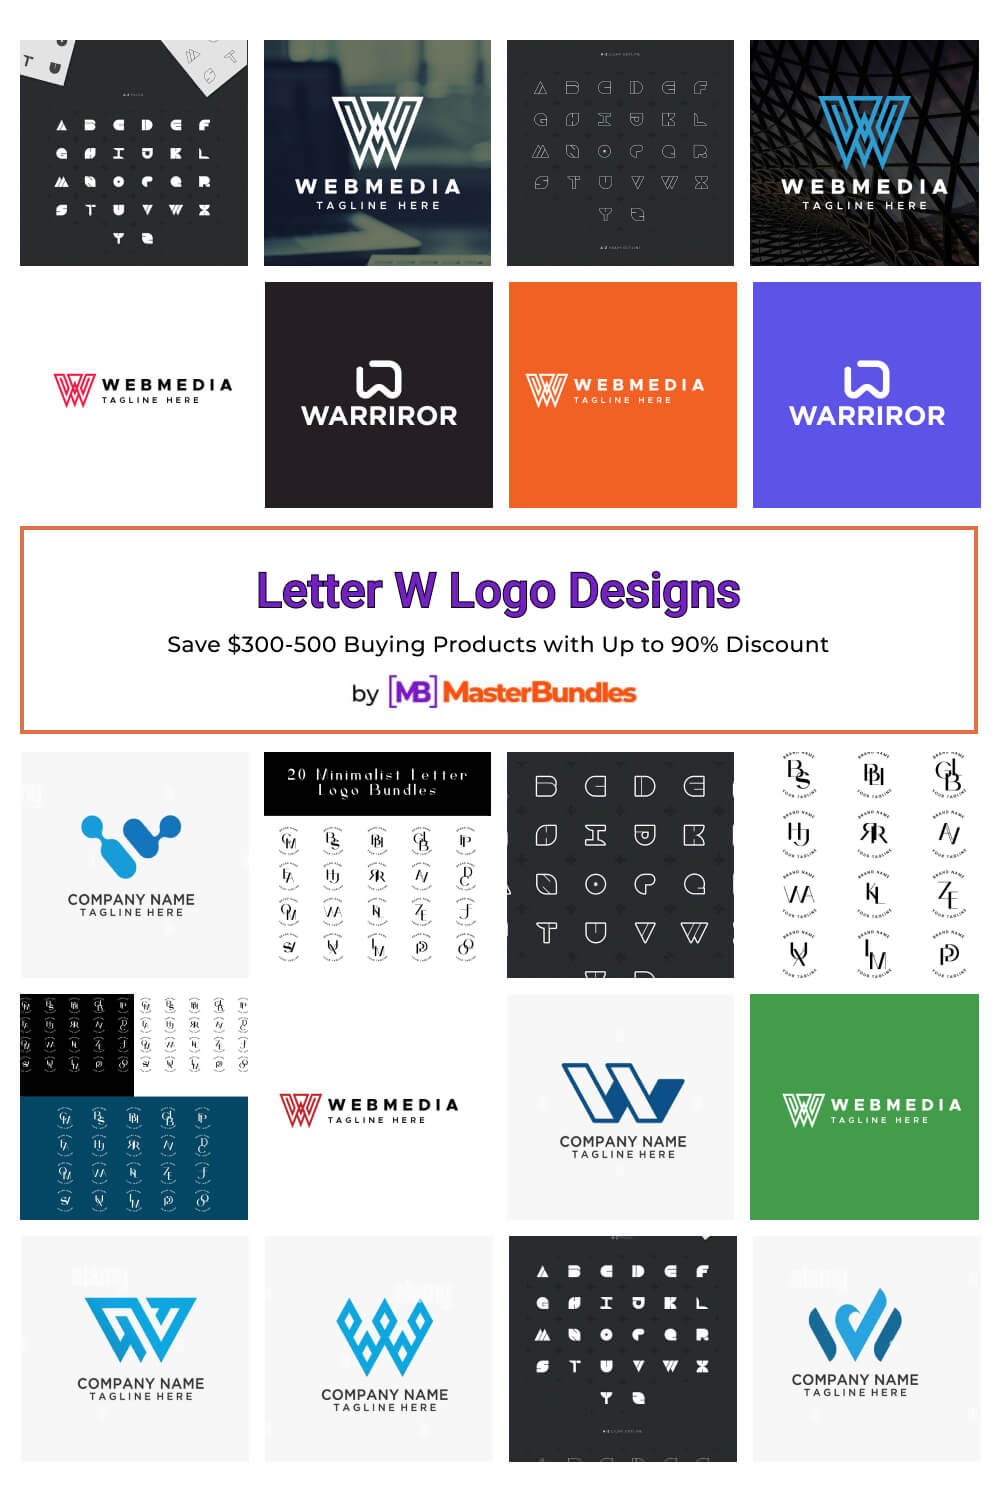 letter w logo designs pinterest image.